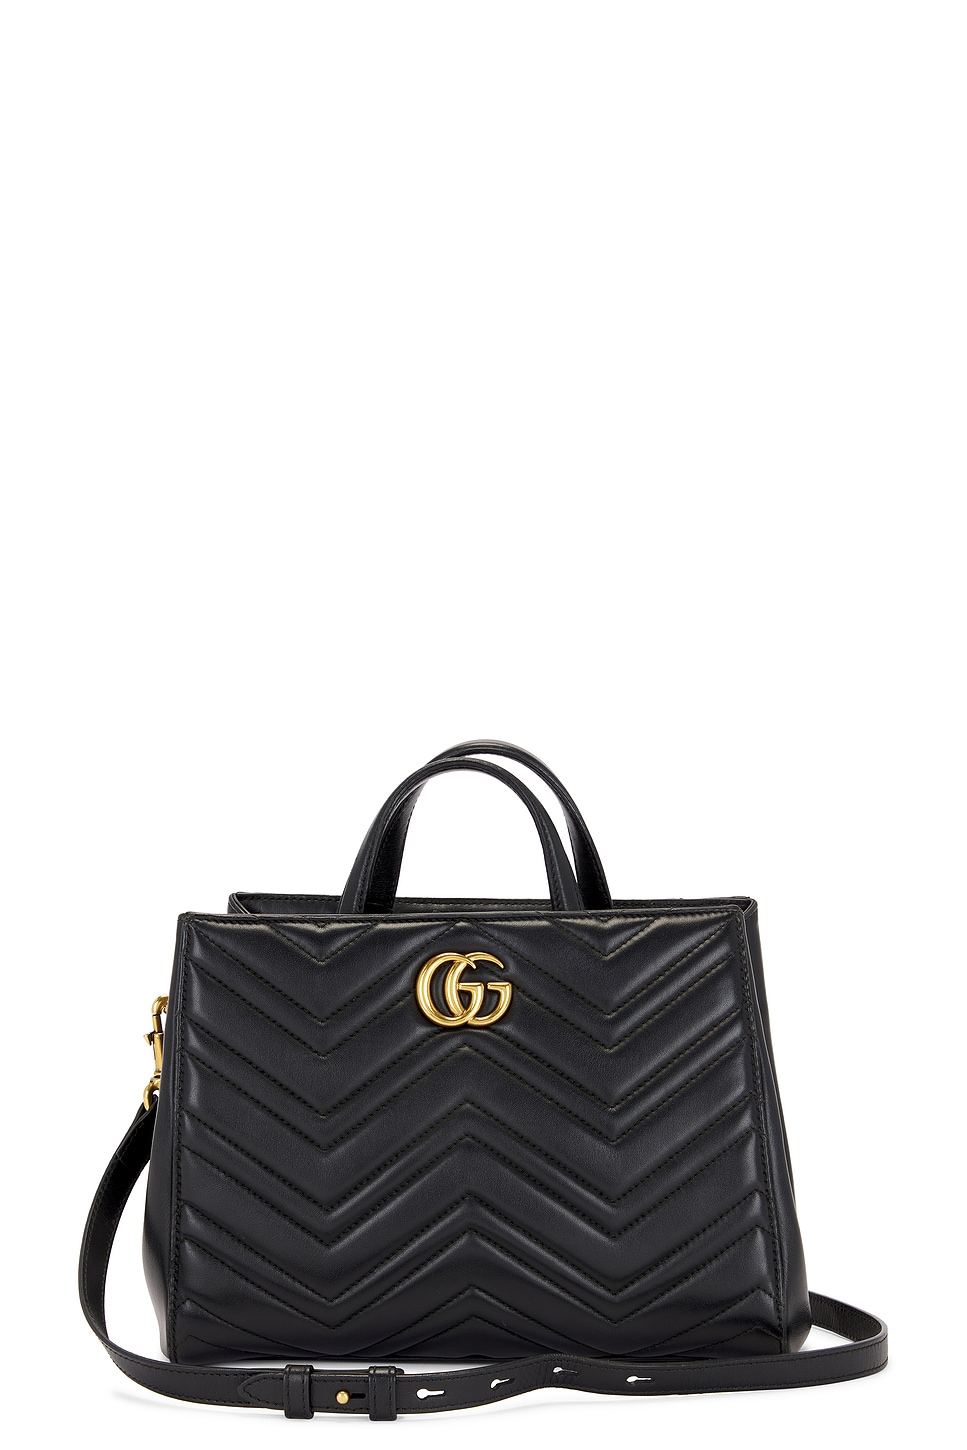 Gucci Gg Marmont 2 Way Leather Handbag In Black